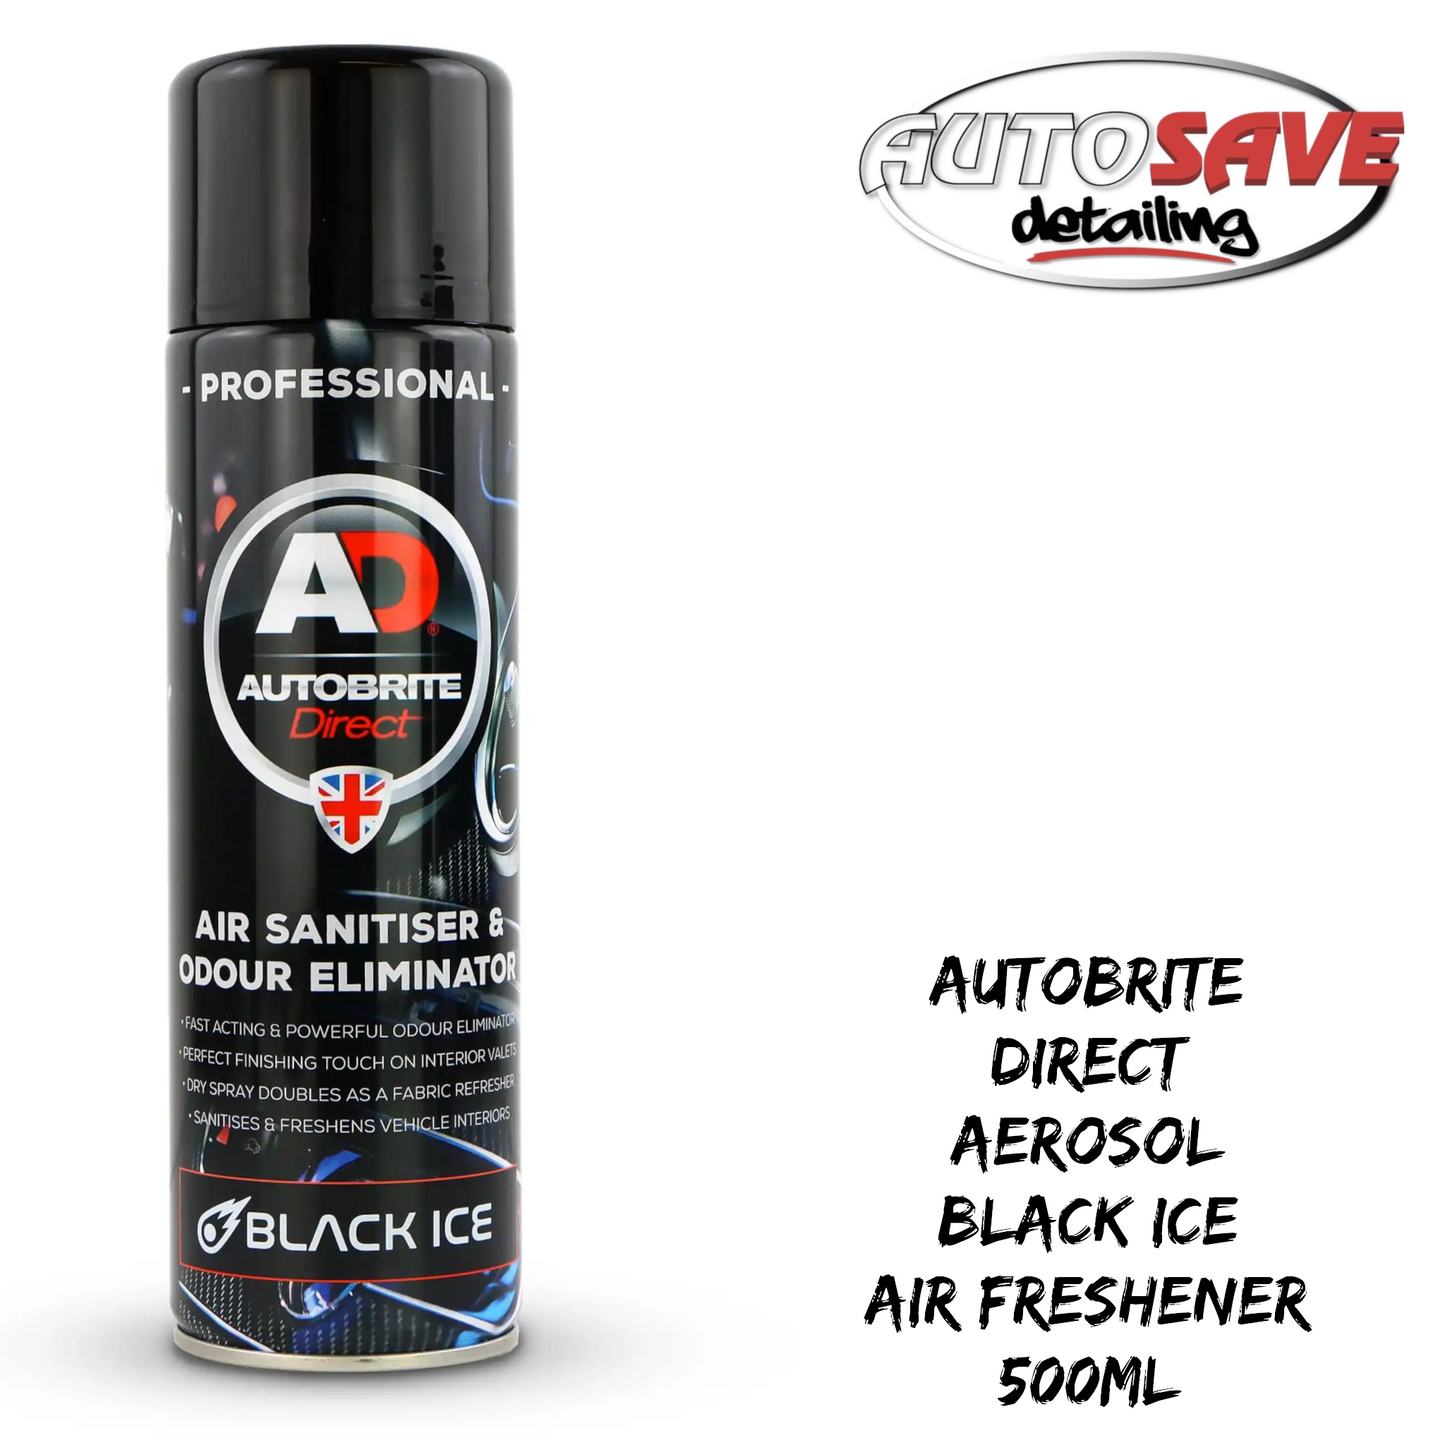 Autobrite Direct - Professional Aerosol Air Freshener x 1 Single Can Black Ice